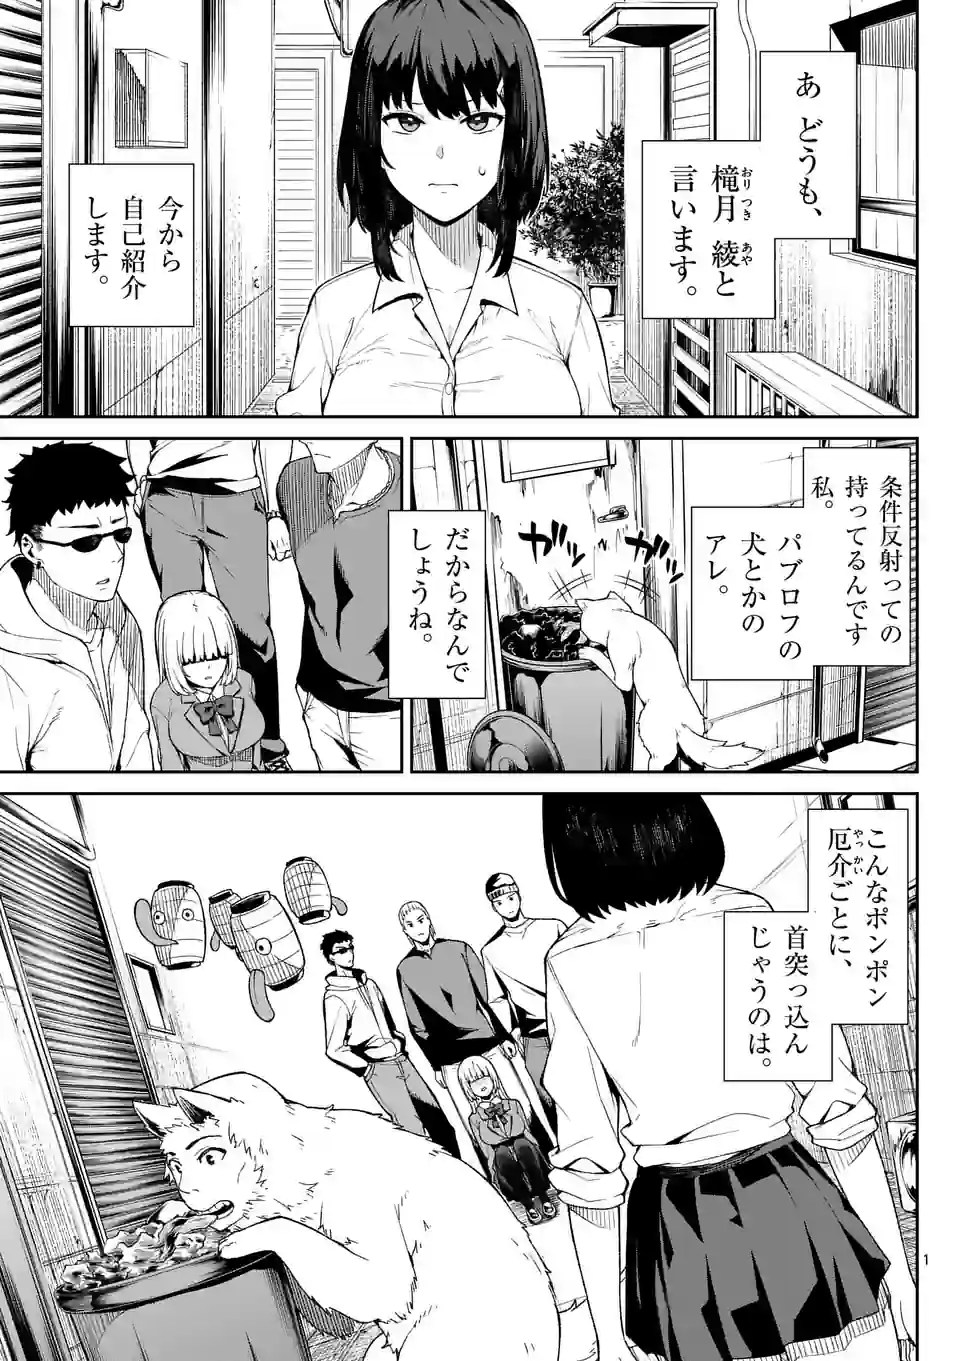 Bakemono Goroshi no Psycholily - Chapter 1 - Page 1